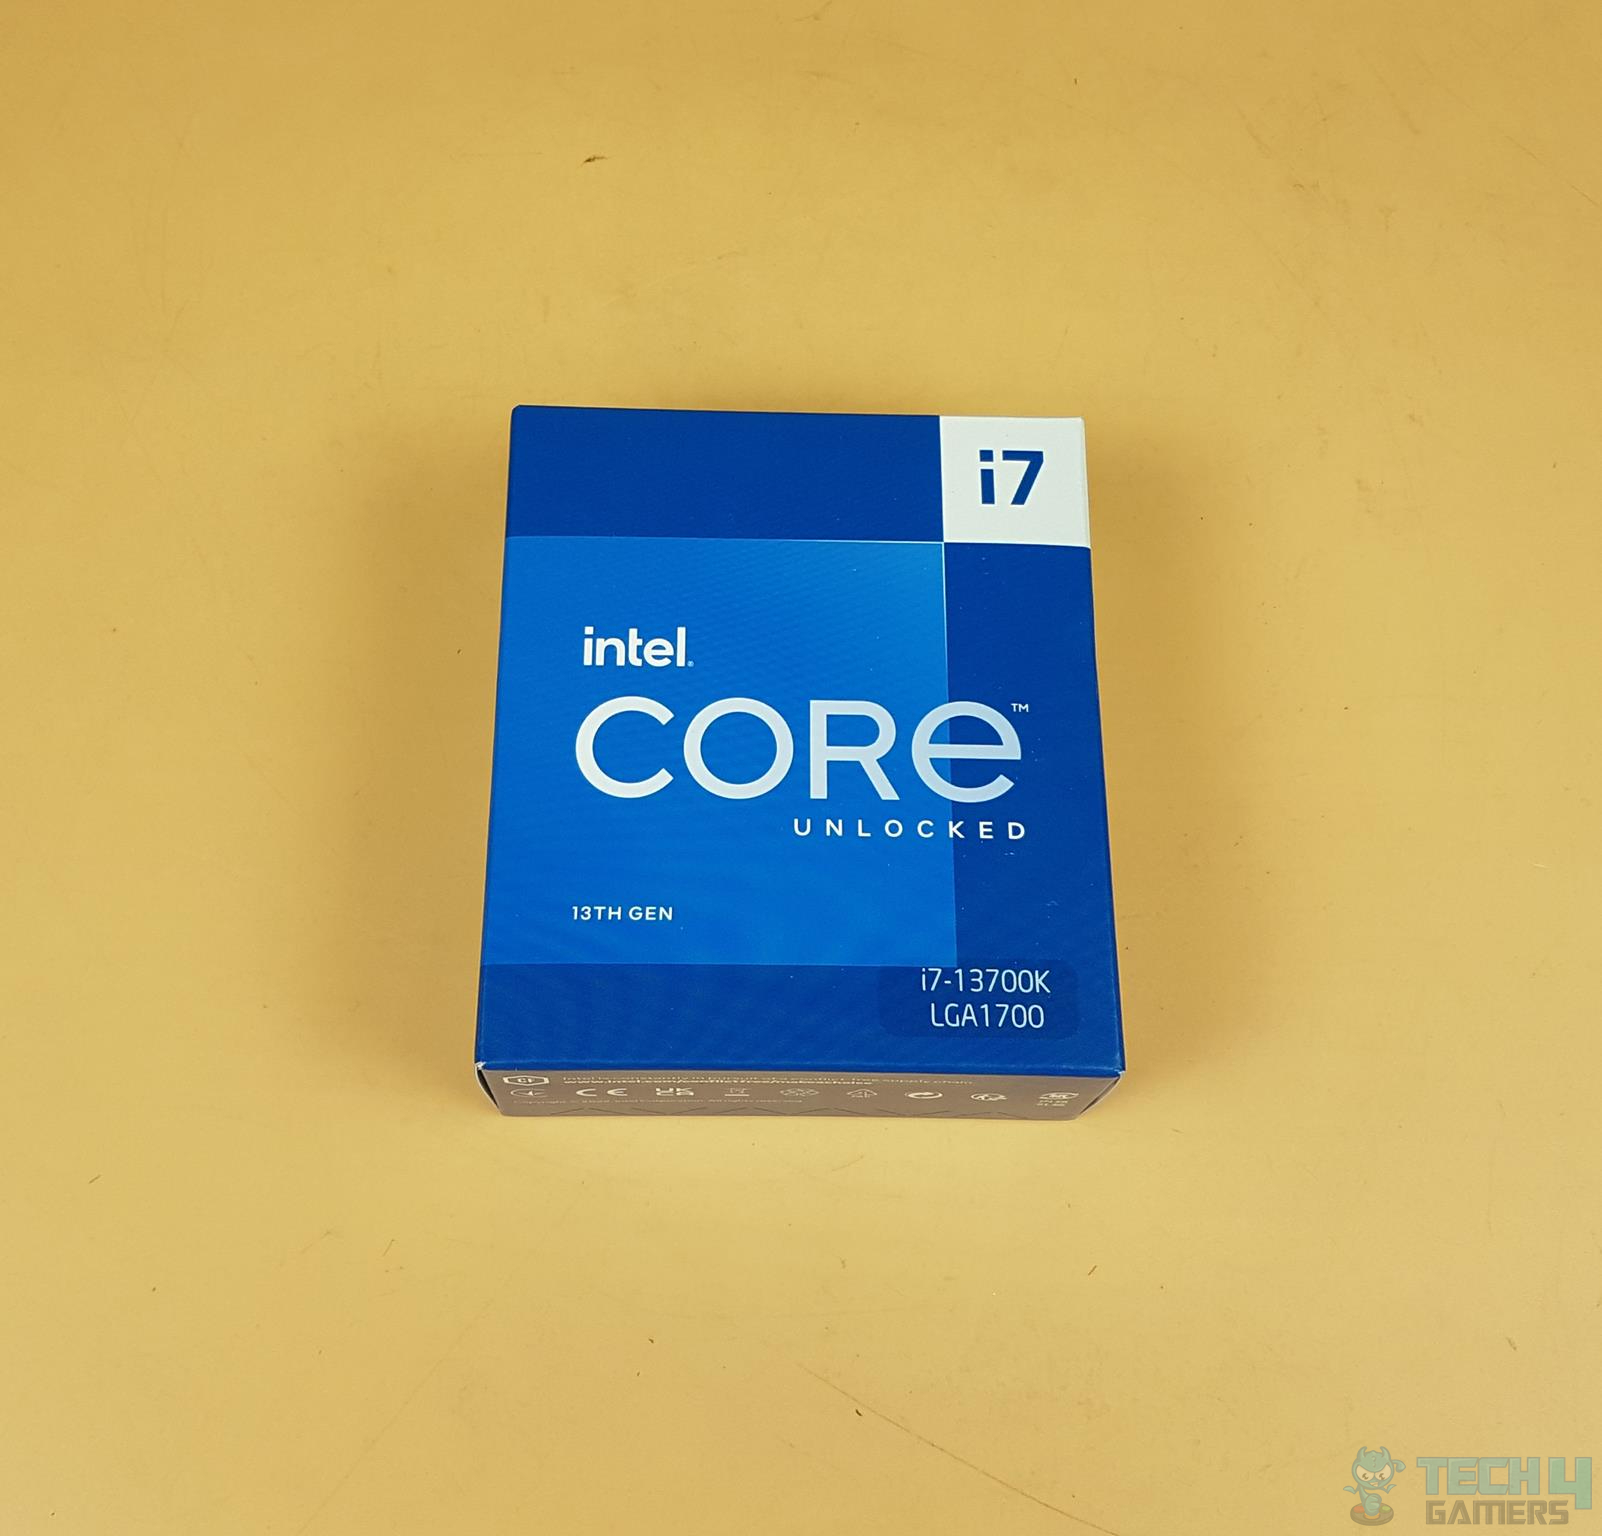 Intel Core i7 13700k Review: Is It Worth It? - TECHTELEGRAPH